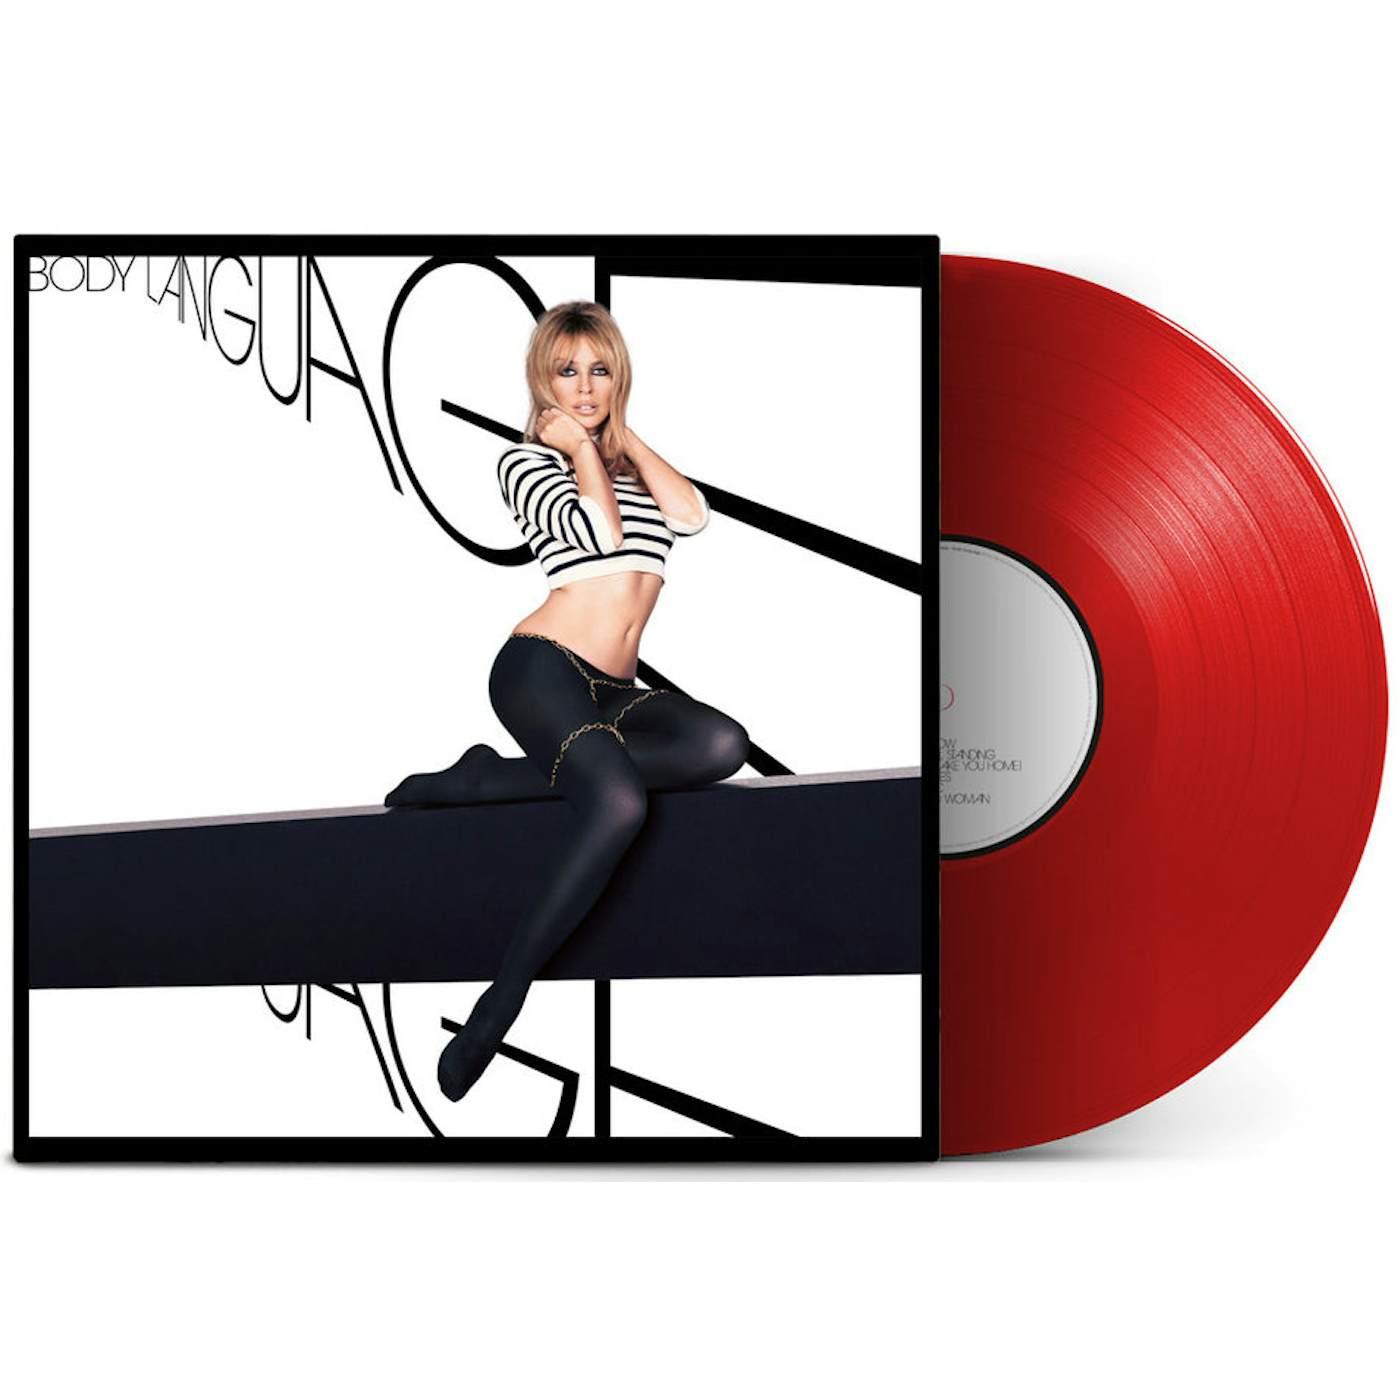 Kylie Minogue - Body Language (Vinyl)